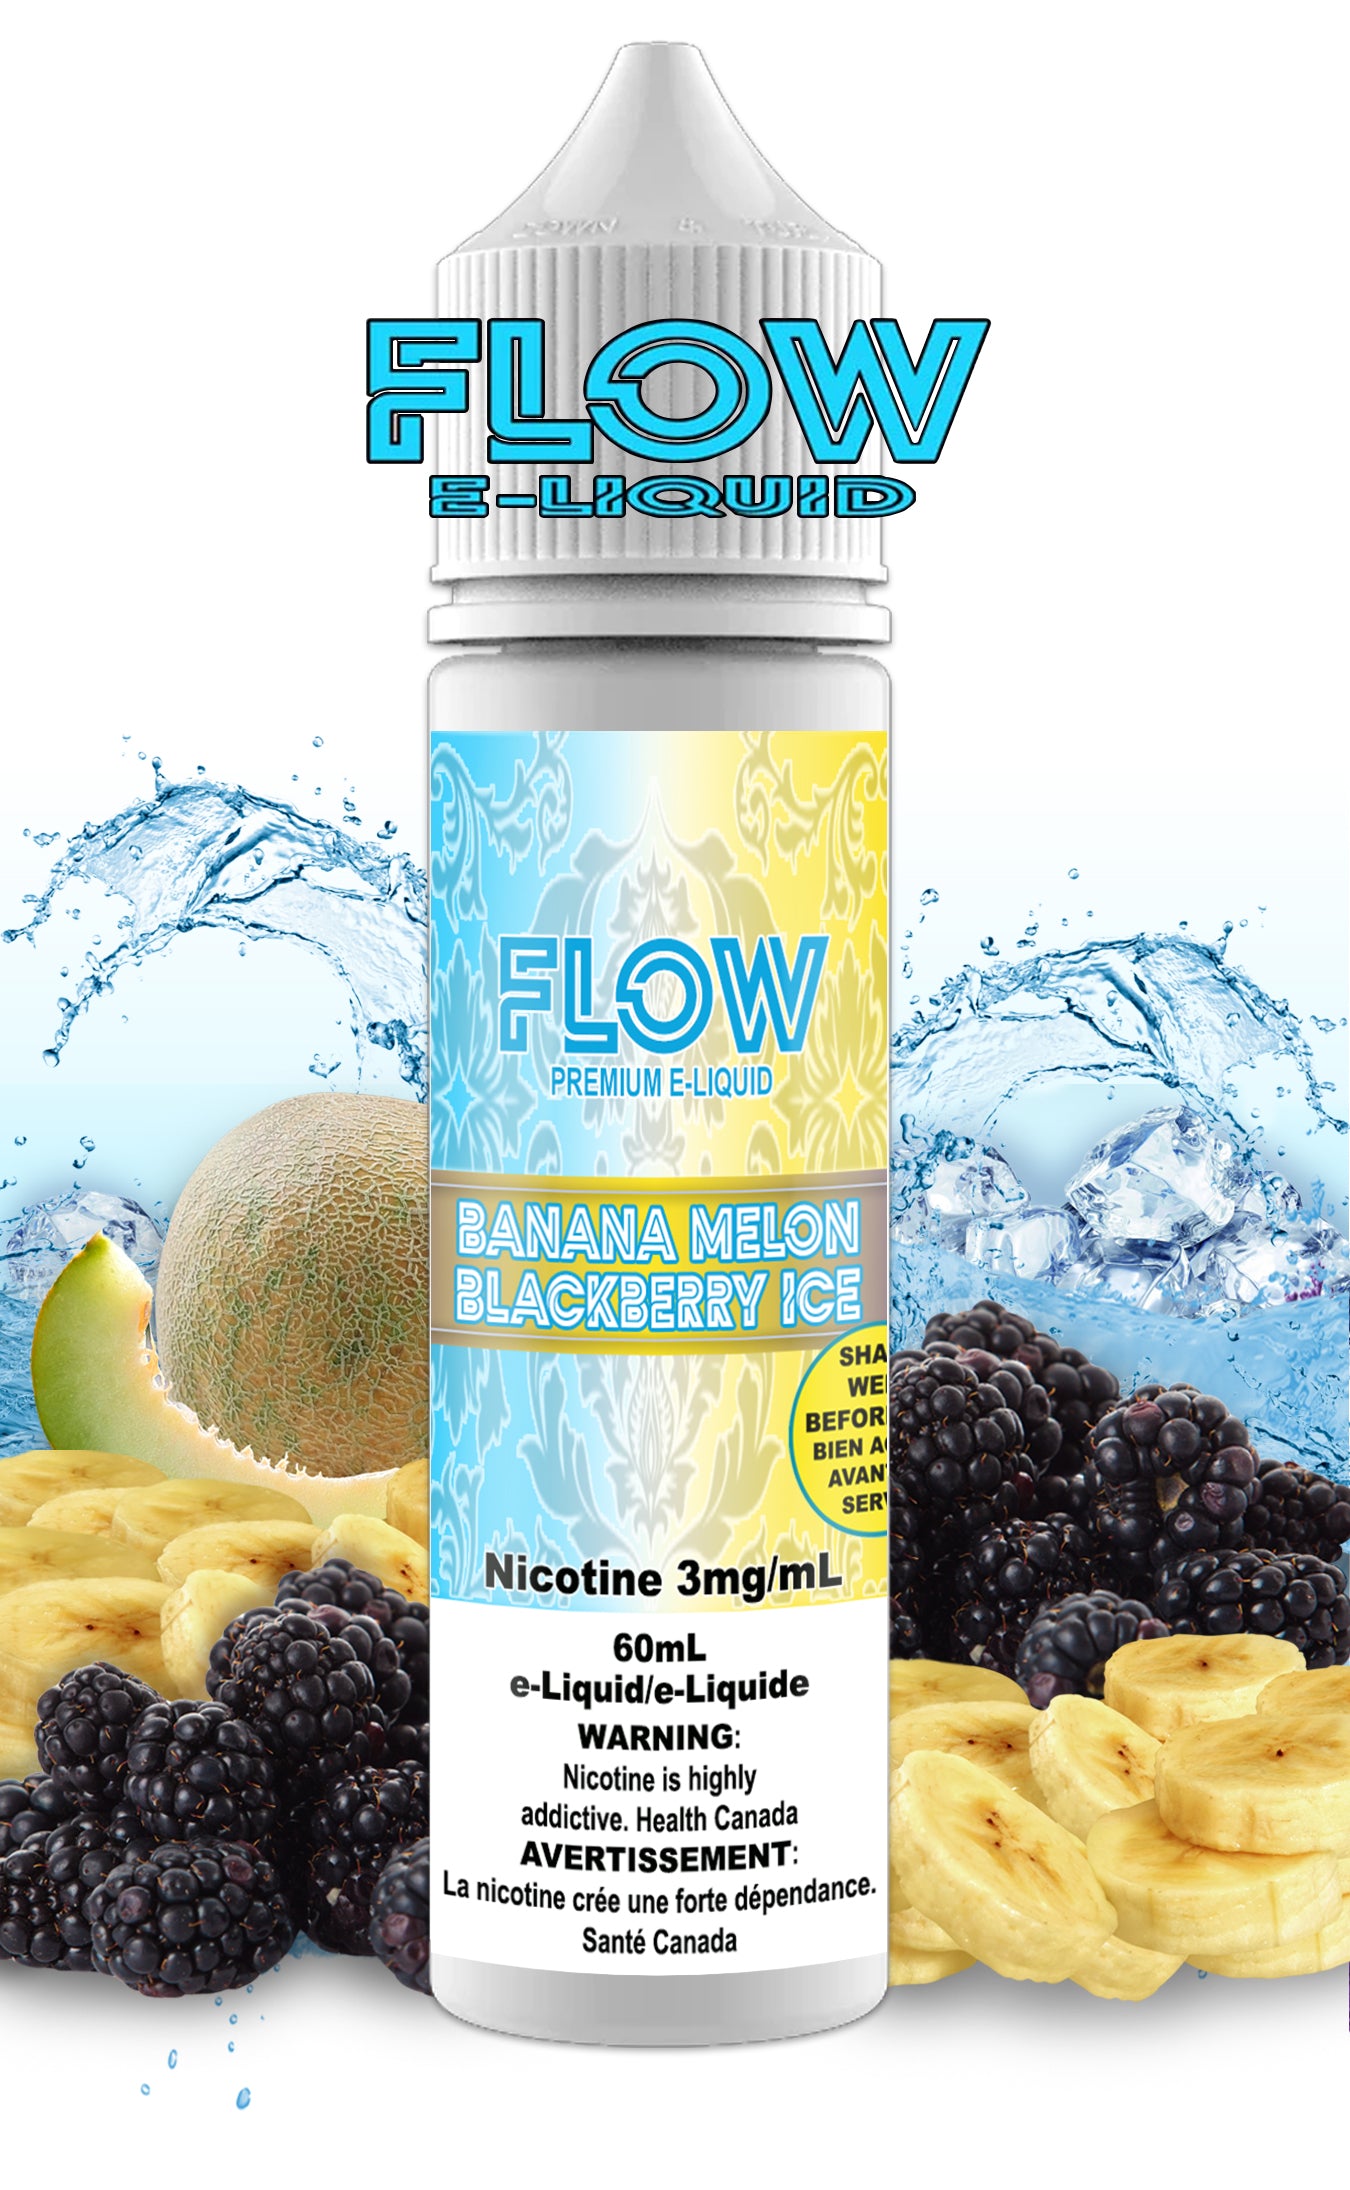 FLOW E-LIQUID - BANANA MELON BLACKBERRY ICE